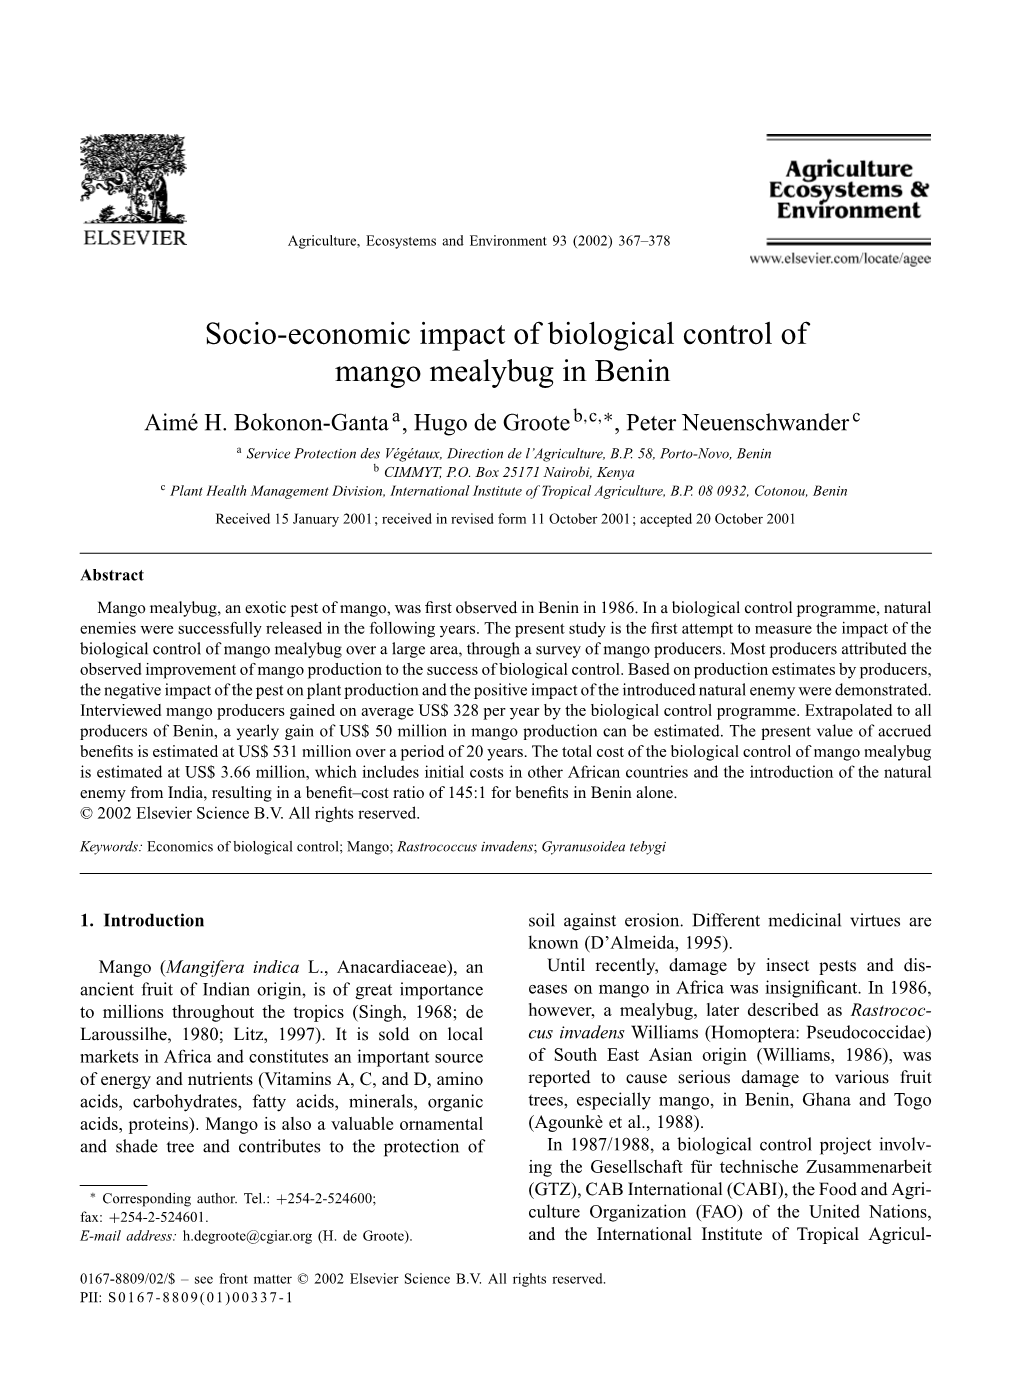 Socio-Economic Impact of Biological Control of Mango Mealybug in Benin Aimé H